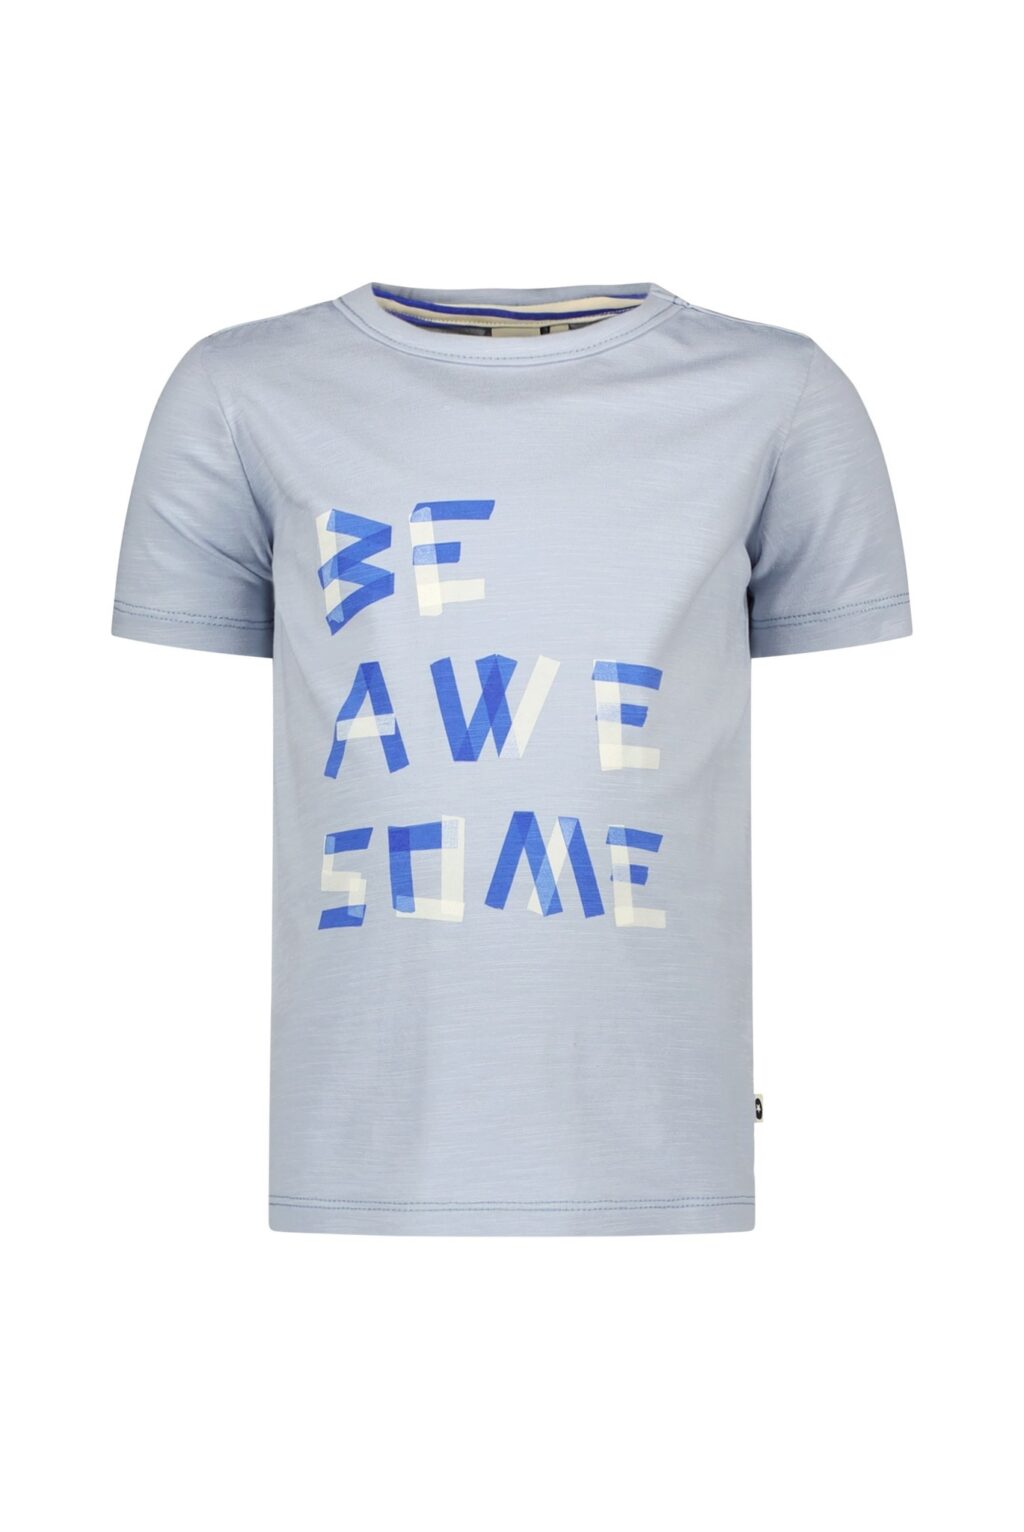 Like Flo Jongens t-shirt - Ice blauw ~ Spinze.nl